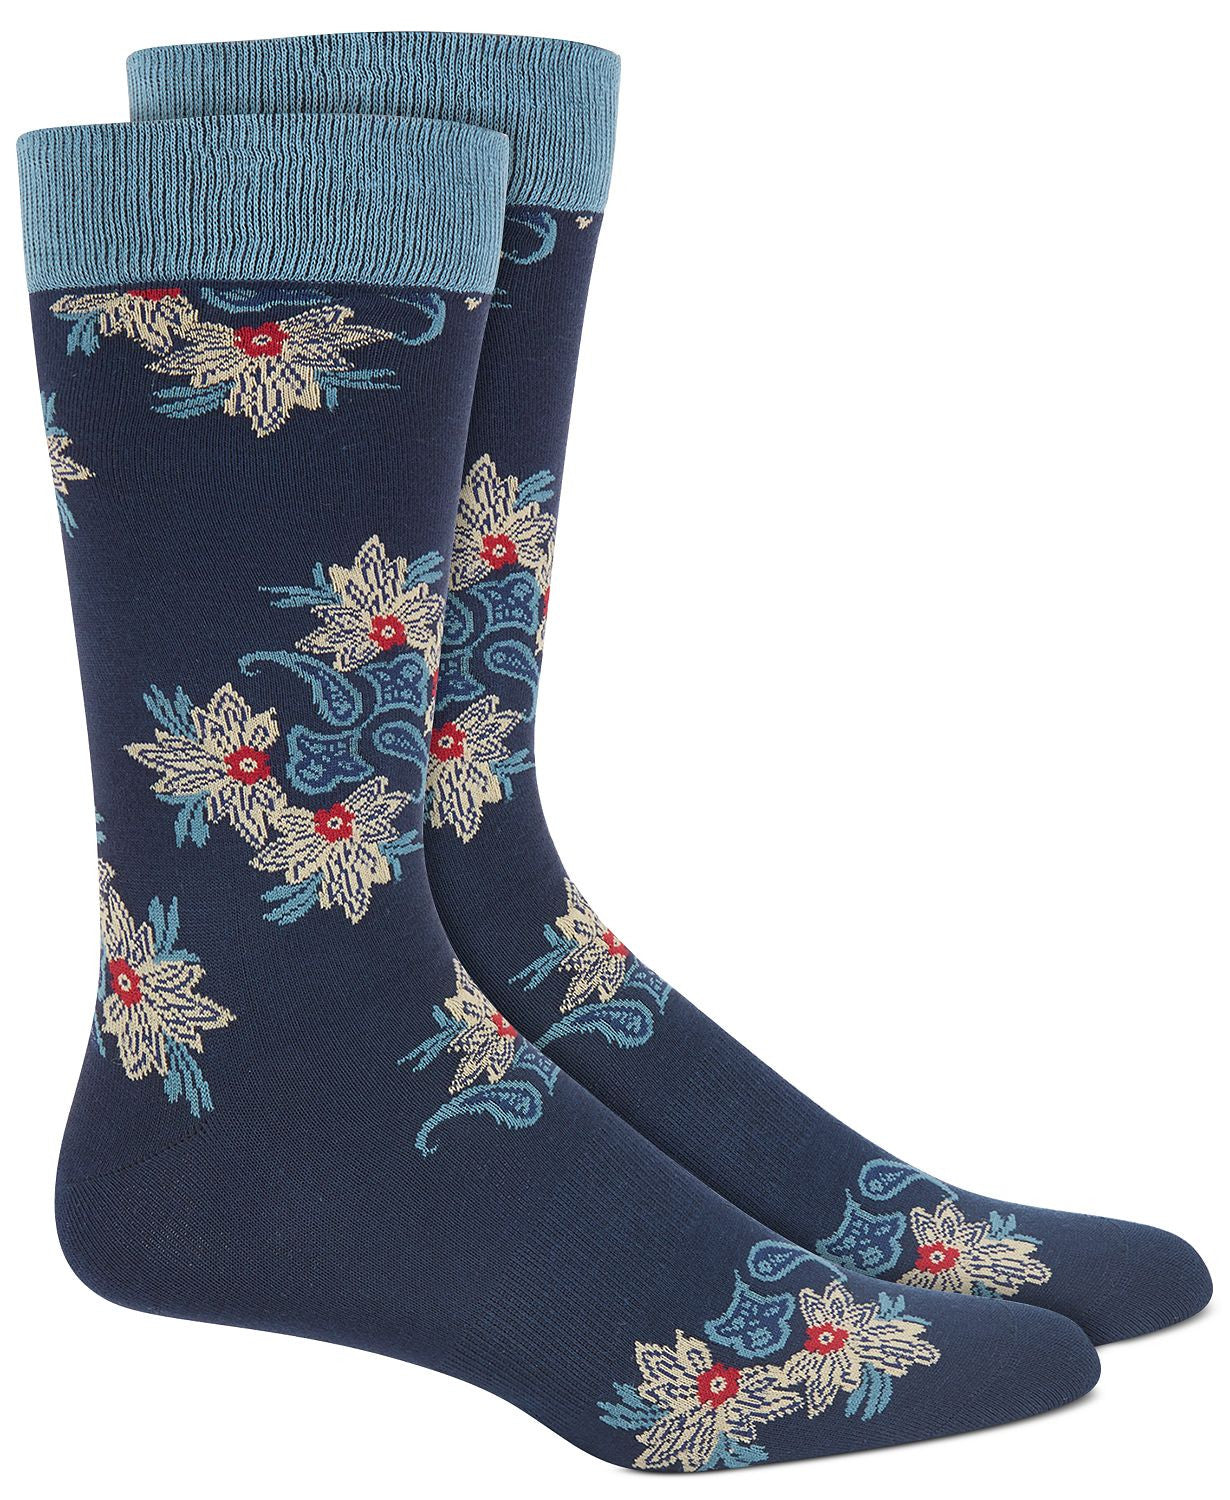 BAR III Paisley Floral Socks / Navy Tan Combo